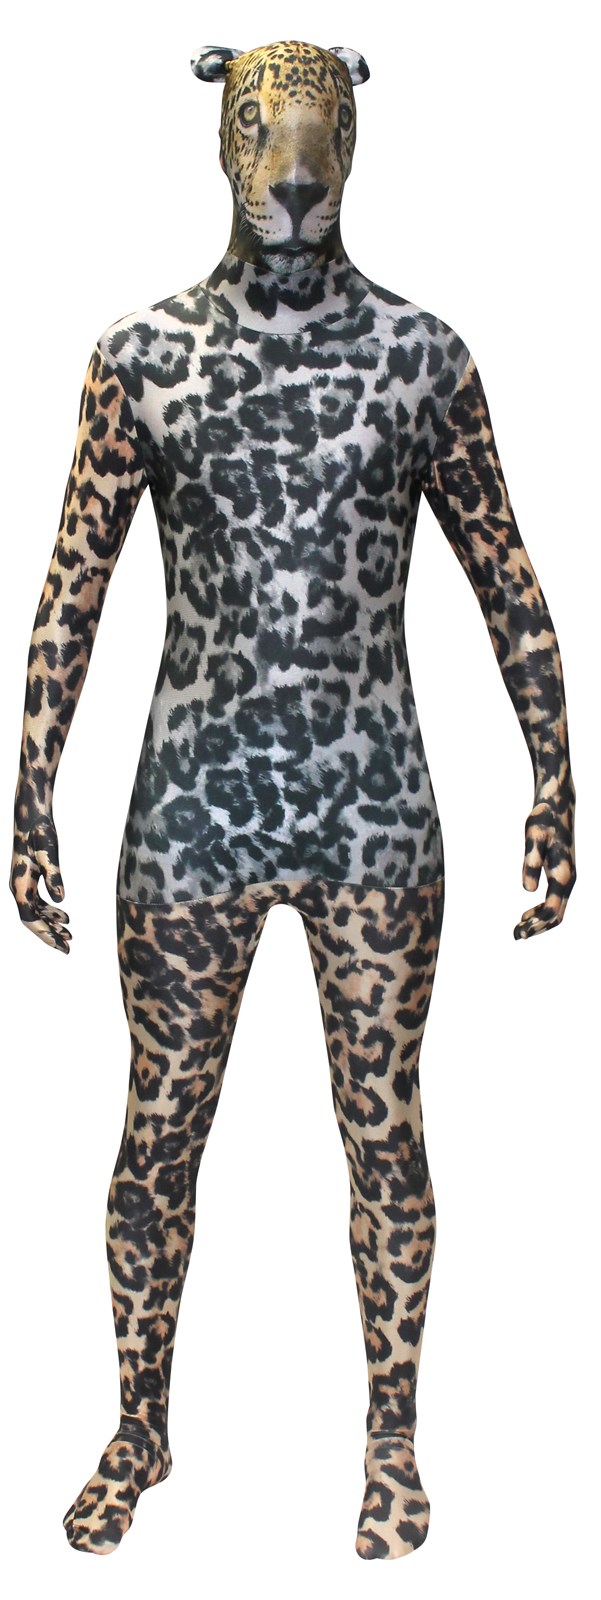 Animal Planet - Jaguar Morphsuit